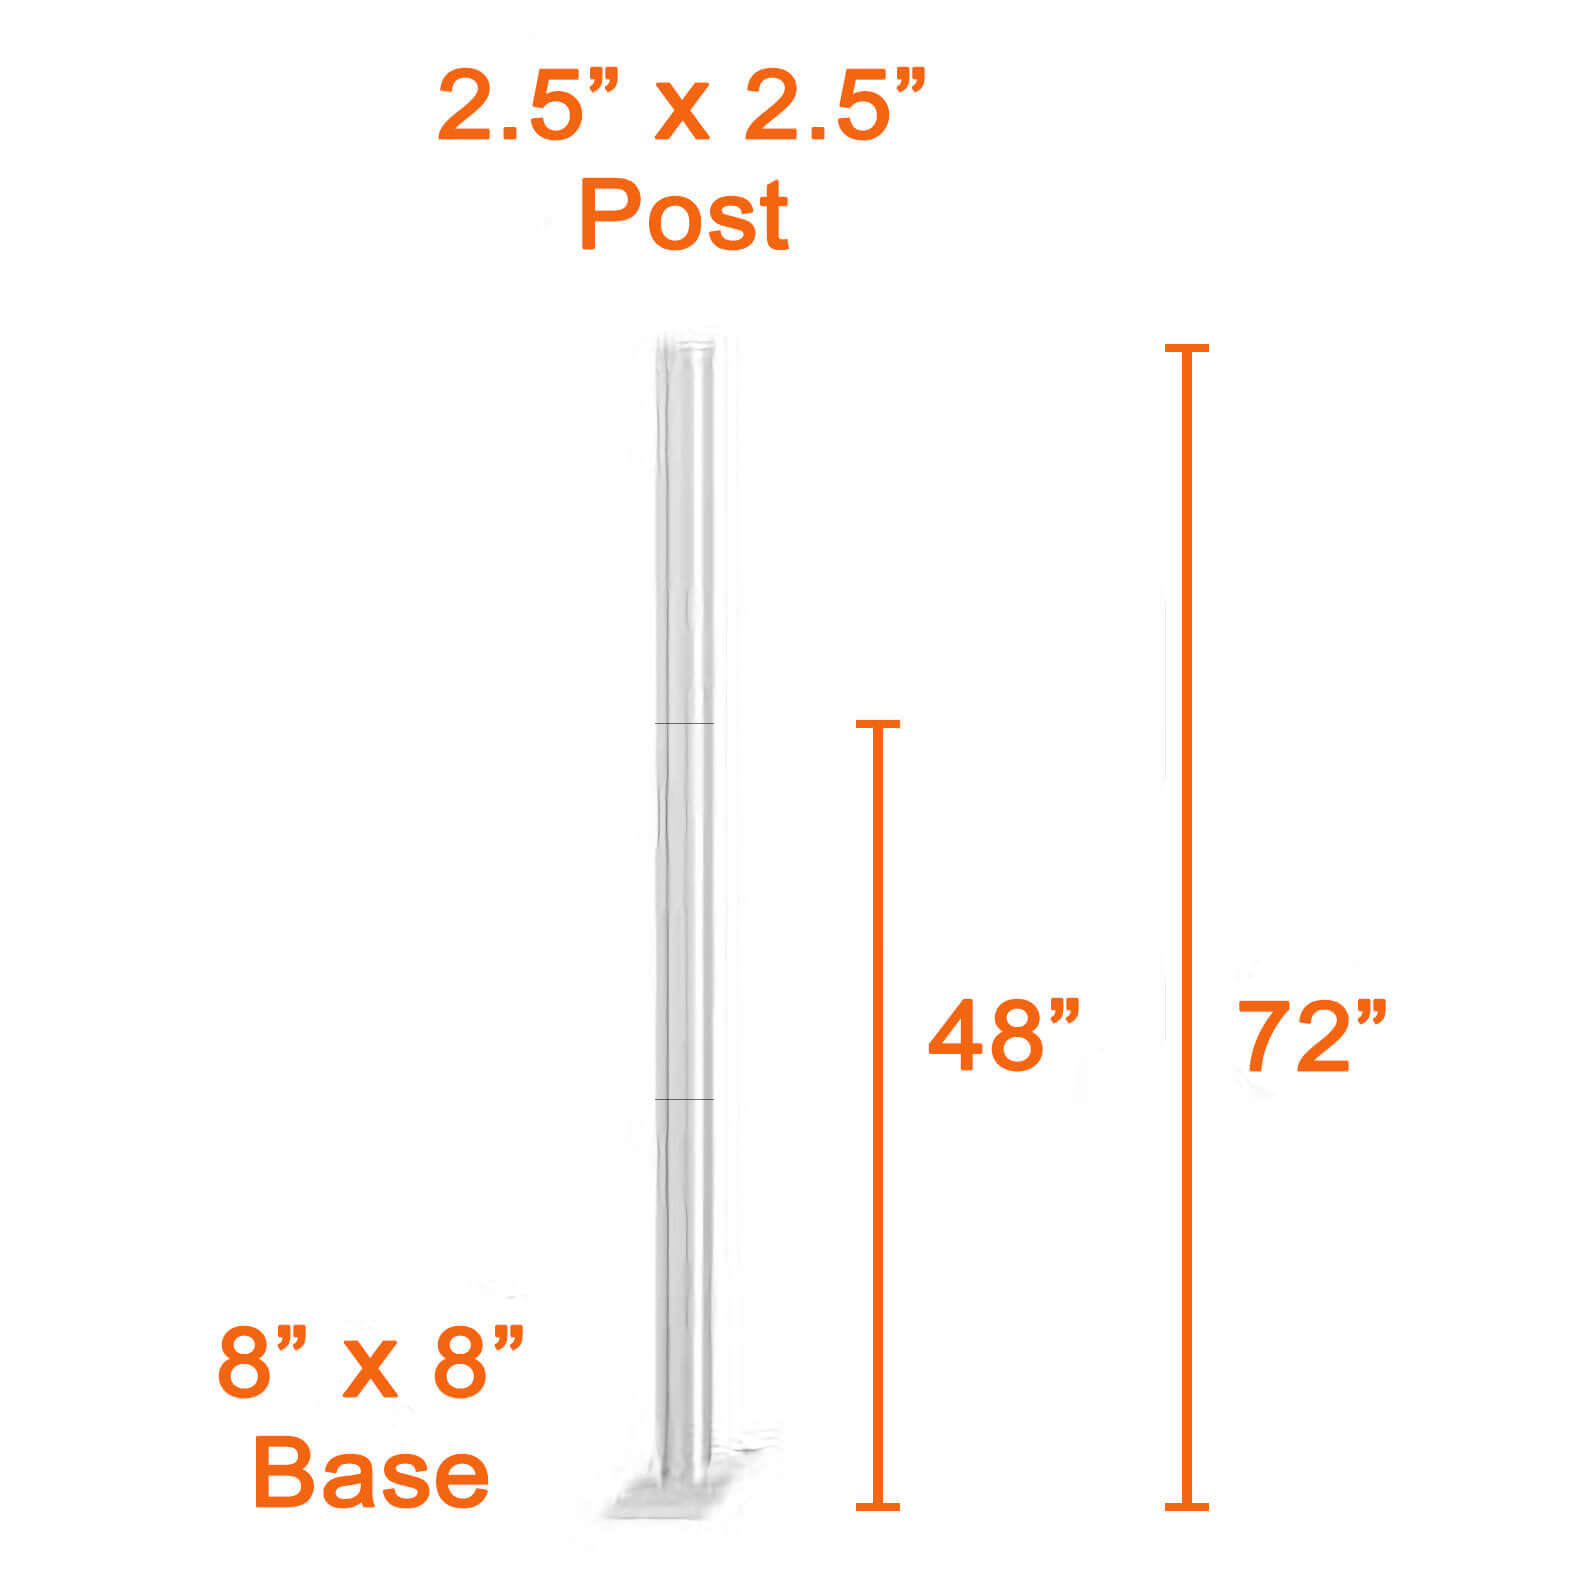 Modular panels post measure